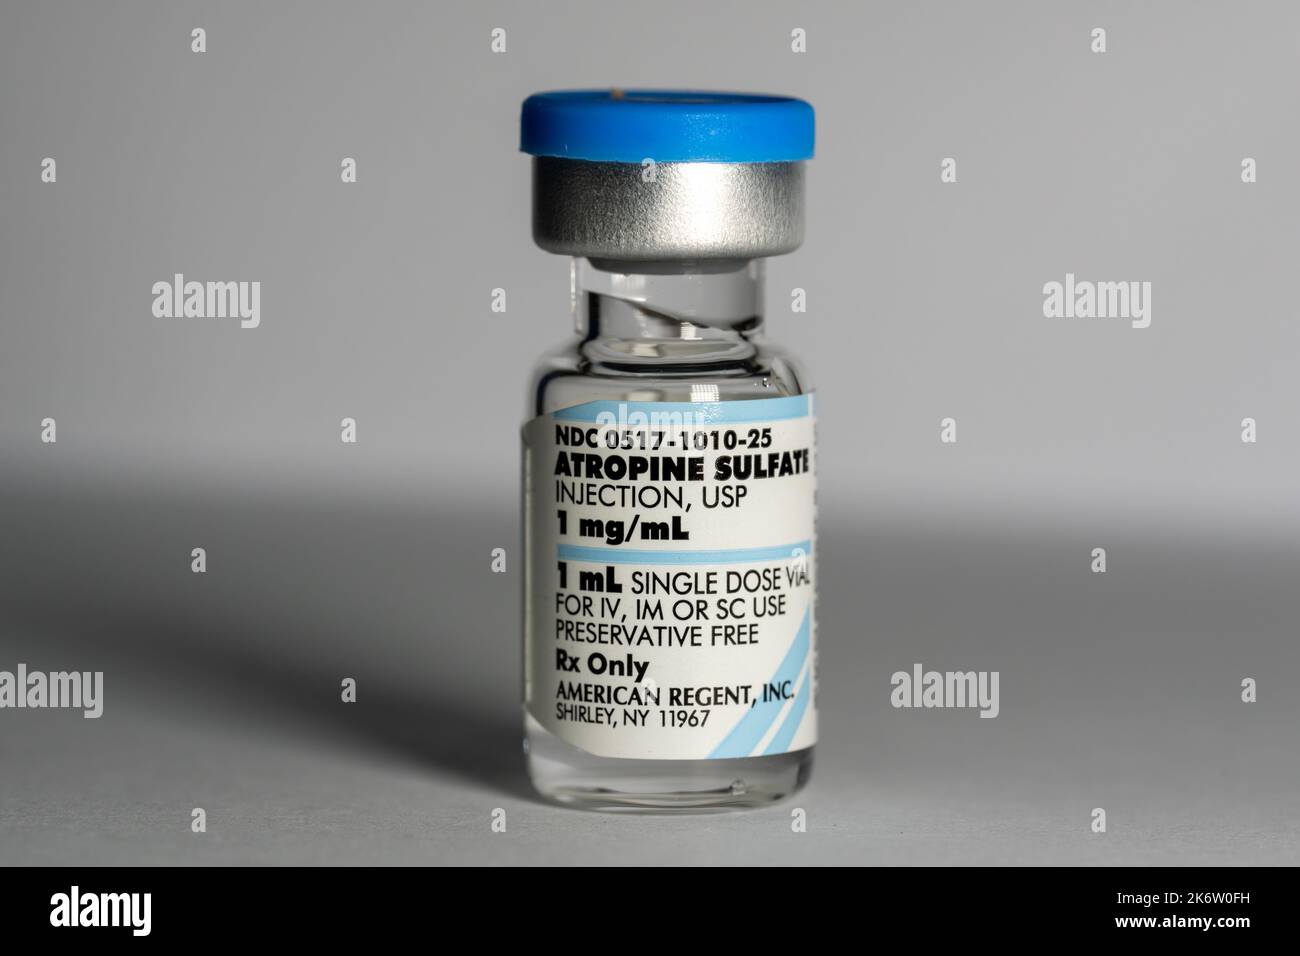 atropine sulfate injection vial Stock Photo